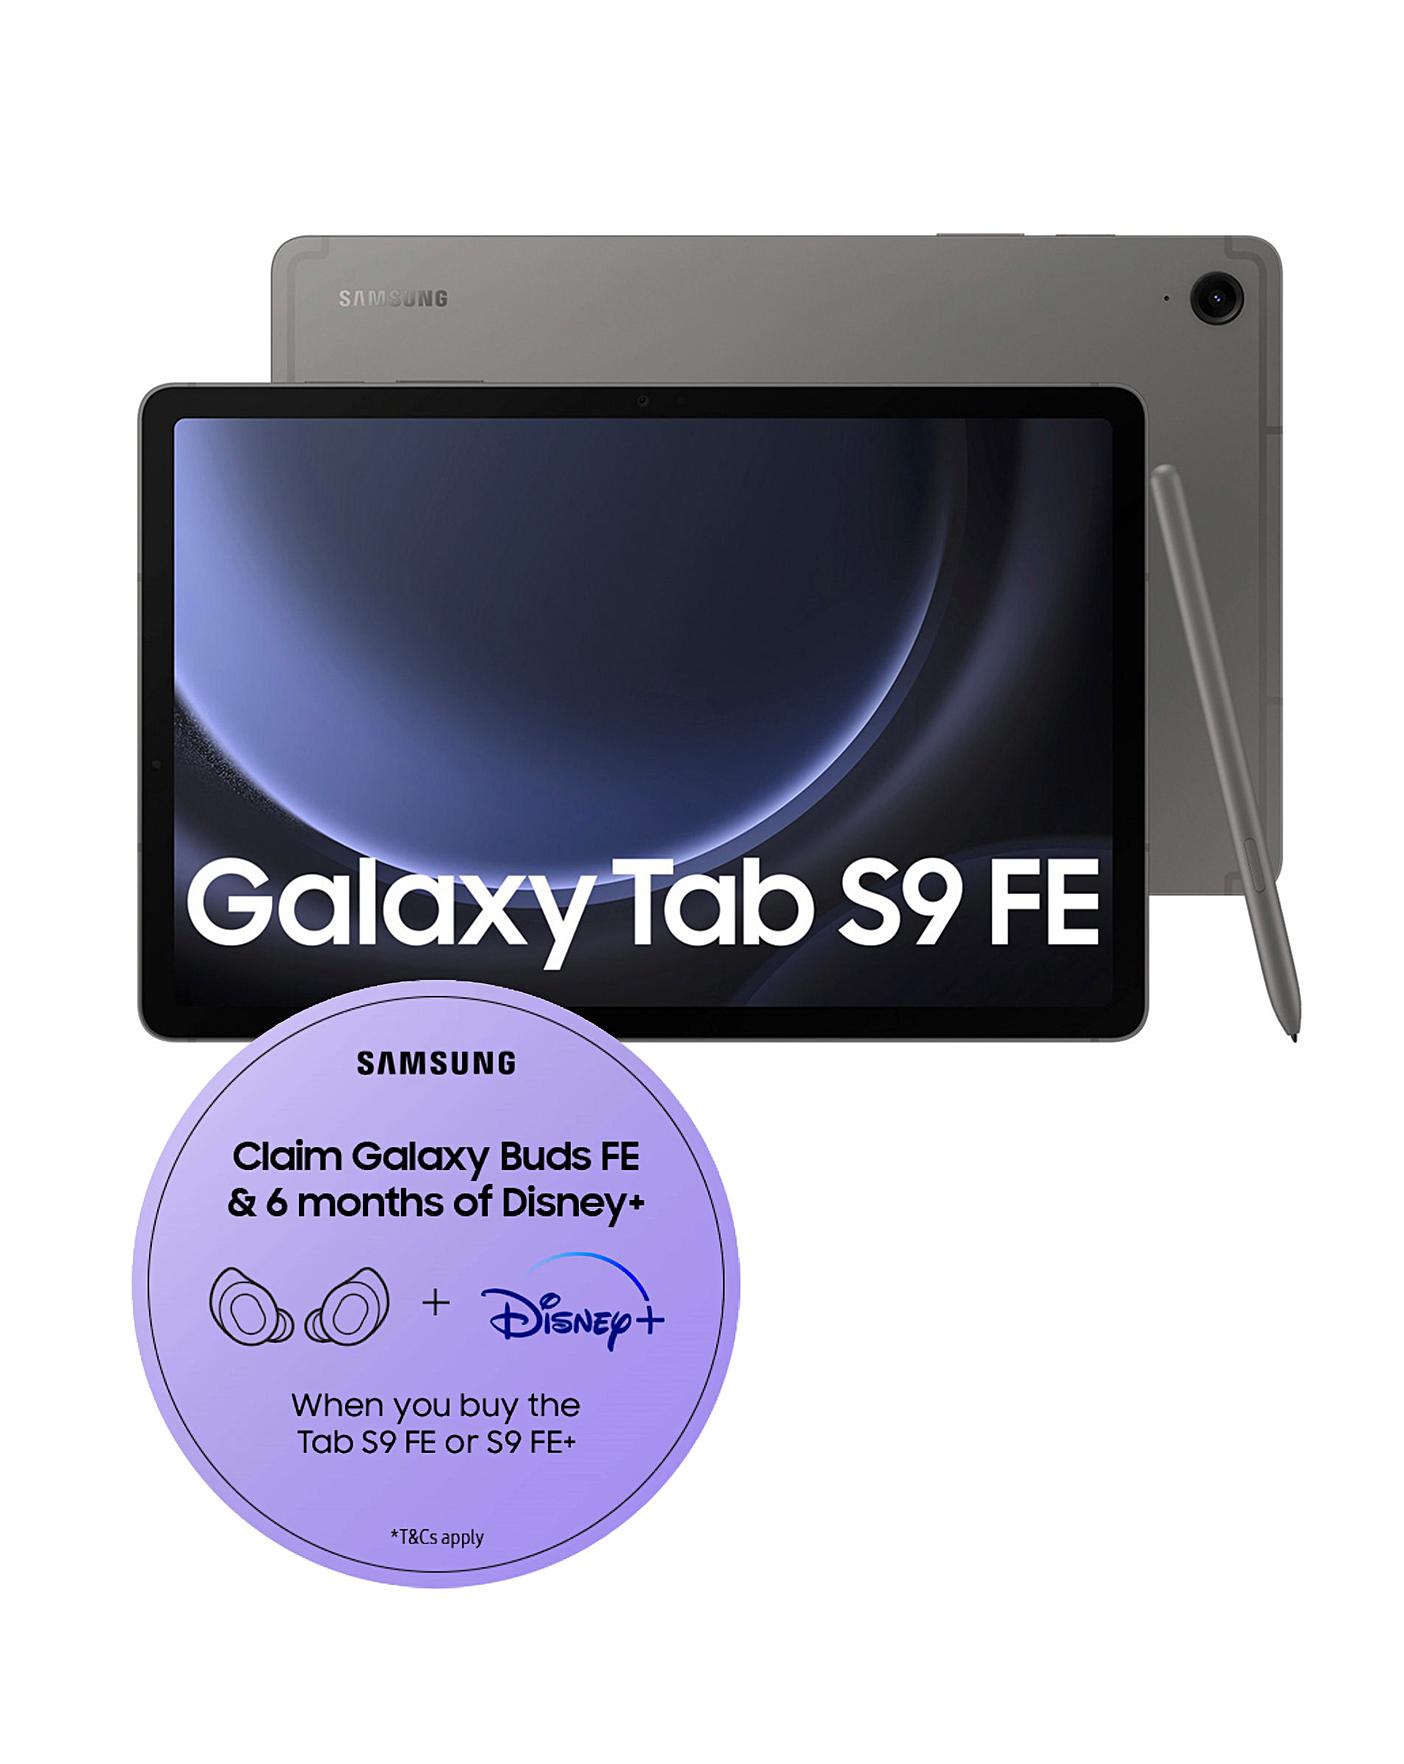 Samsung Galaxy Tab S9 FE Review